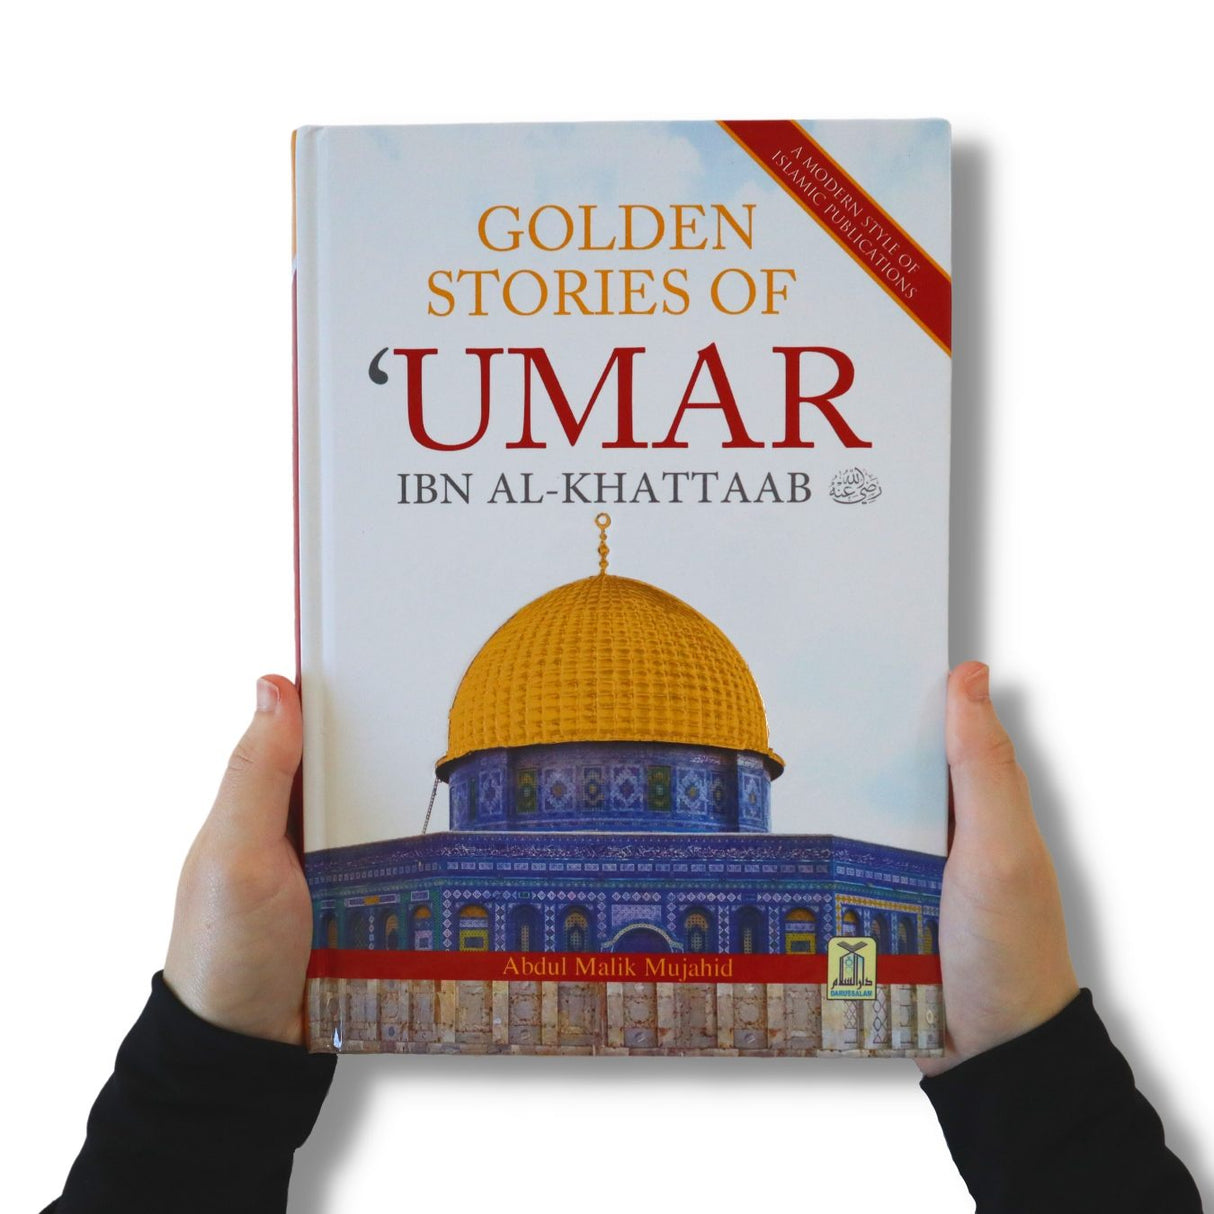 Golden Stories Of Umar Ibn al-Khattaab